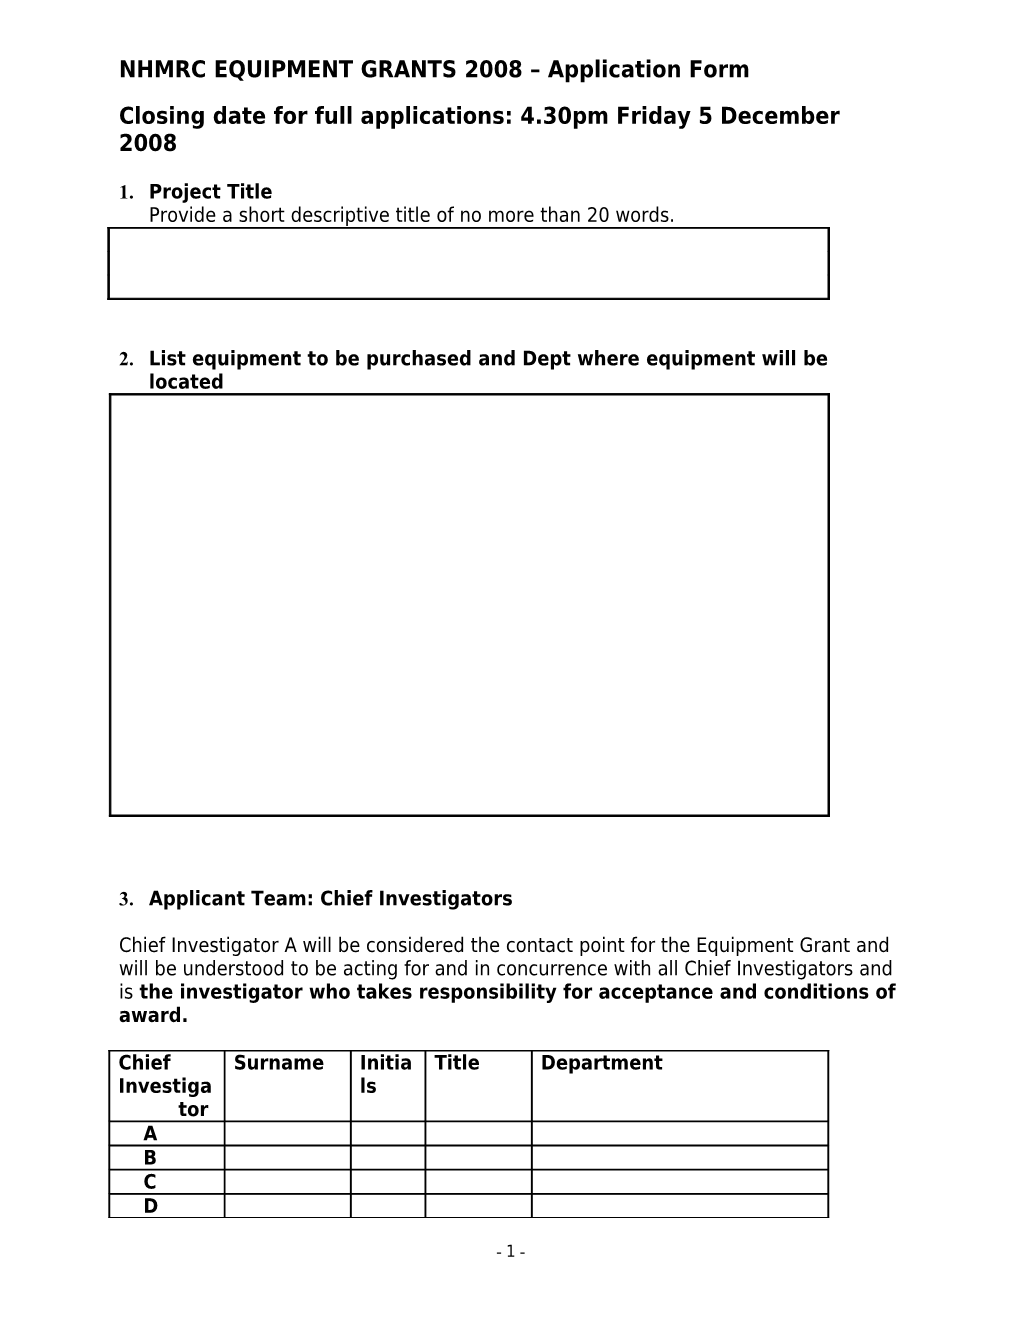 NHMRC EQUIPMENT GRANTS 2007 Application Form